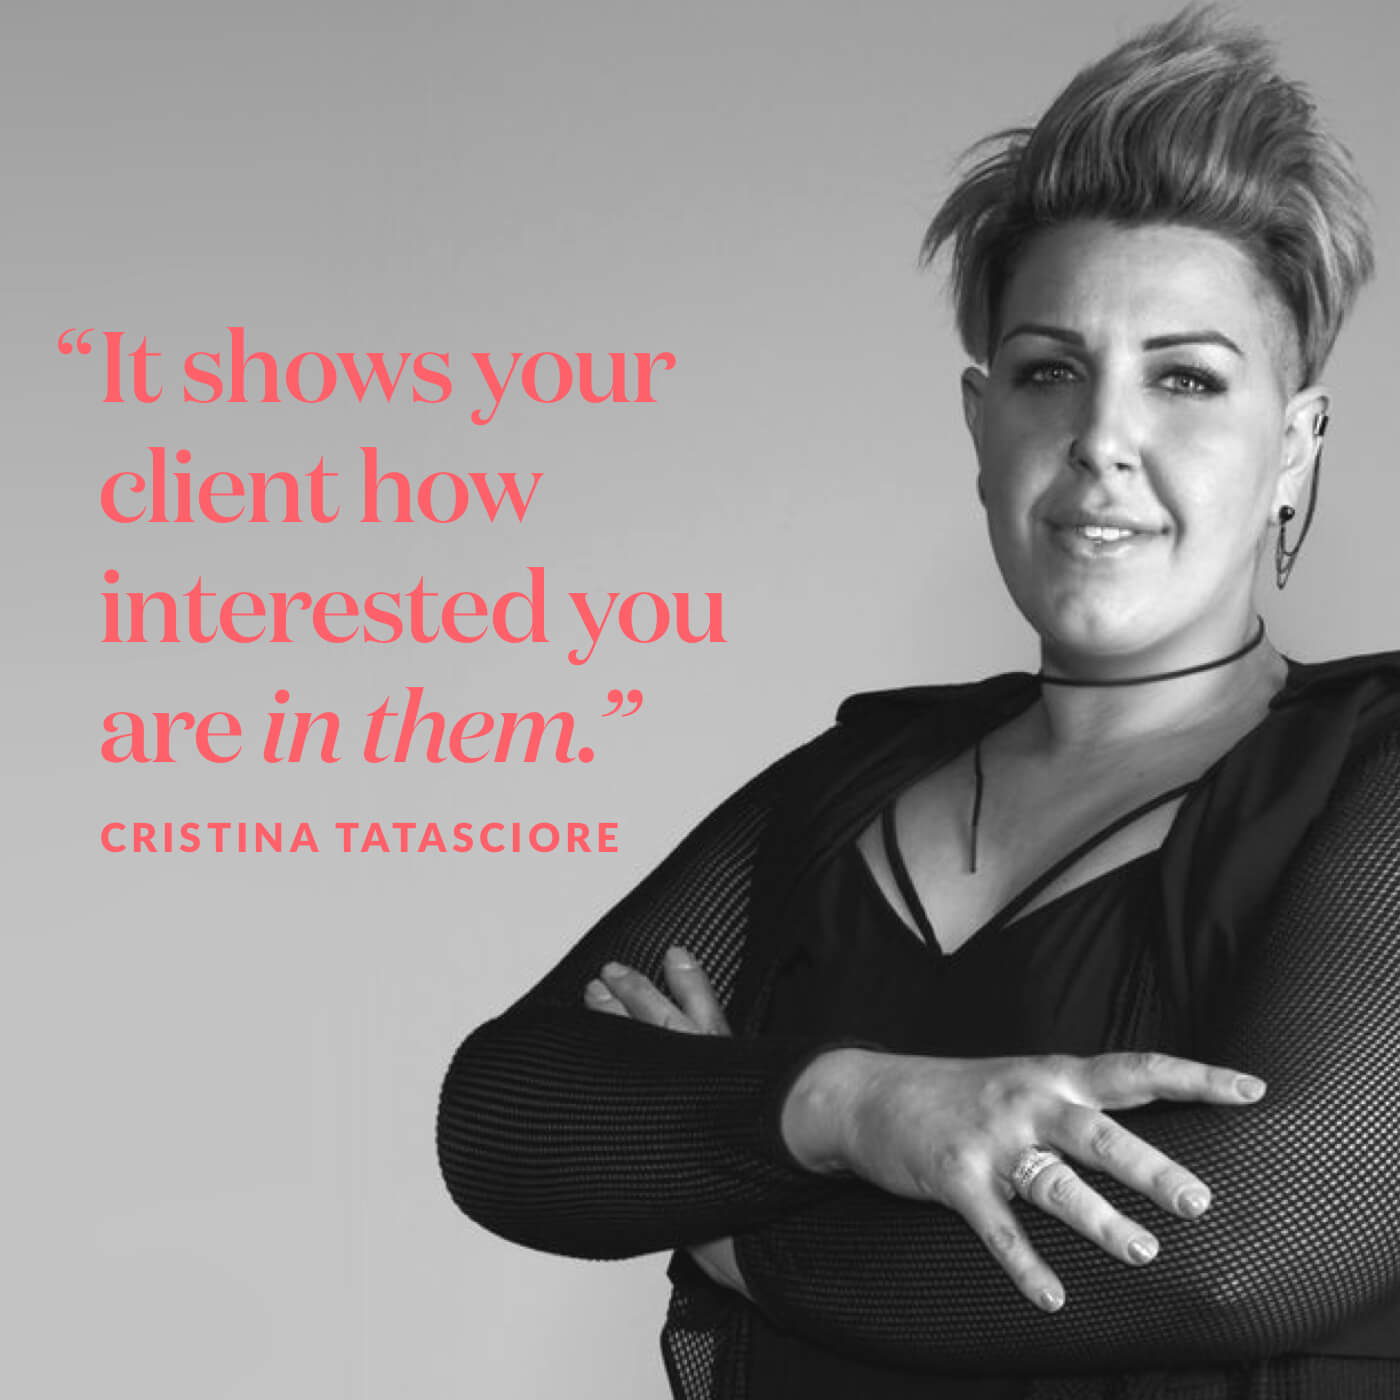 Cristina Tatasciore quote - show interest in your clients